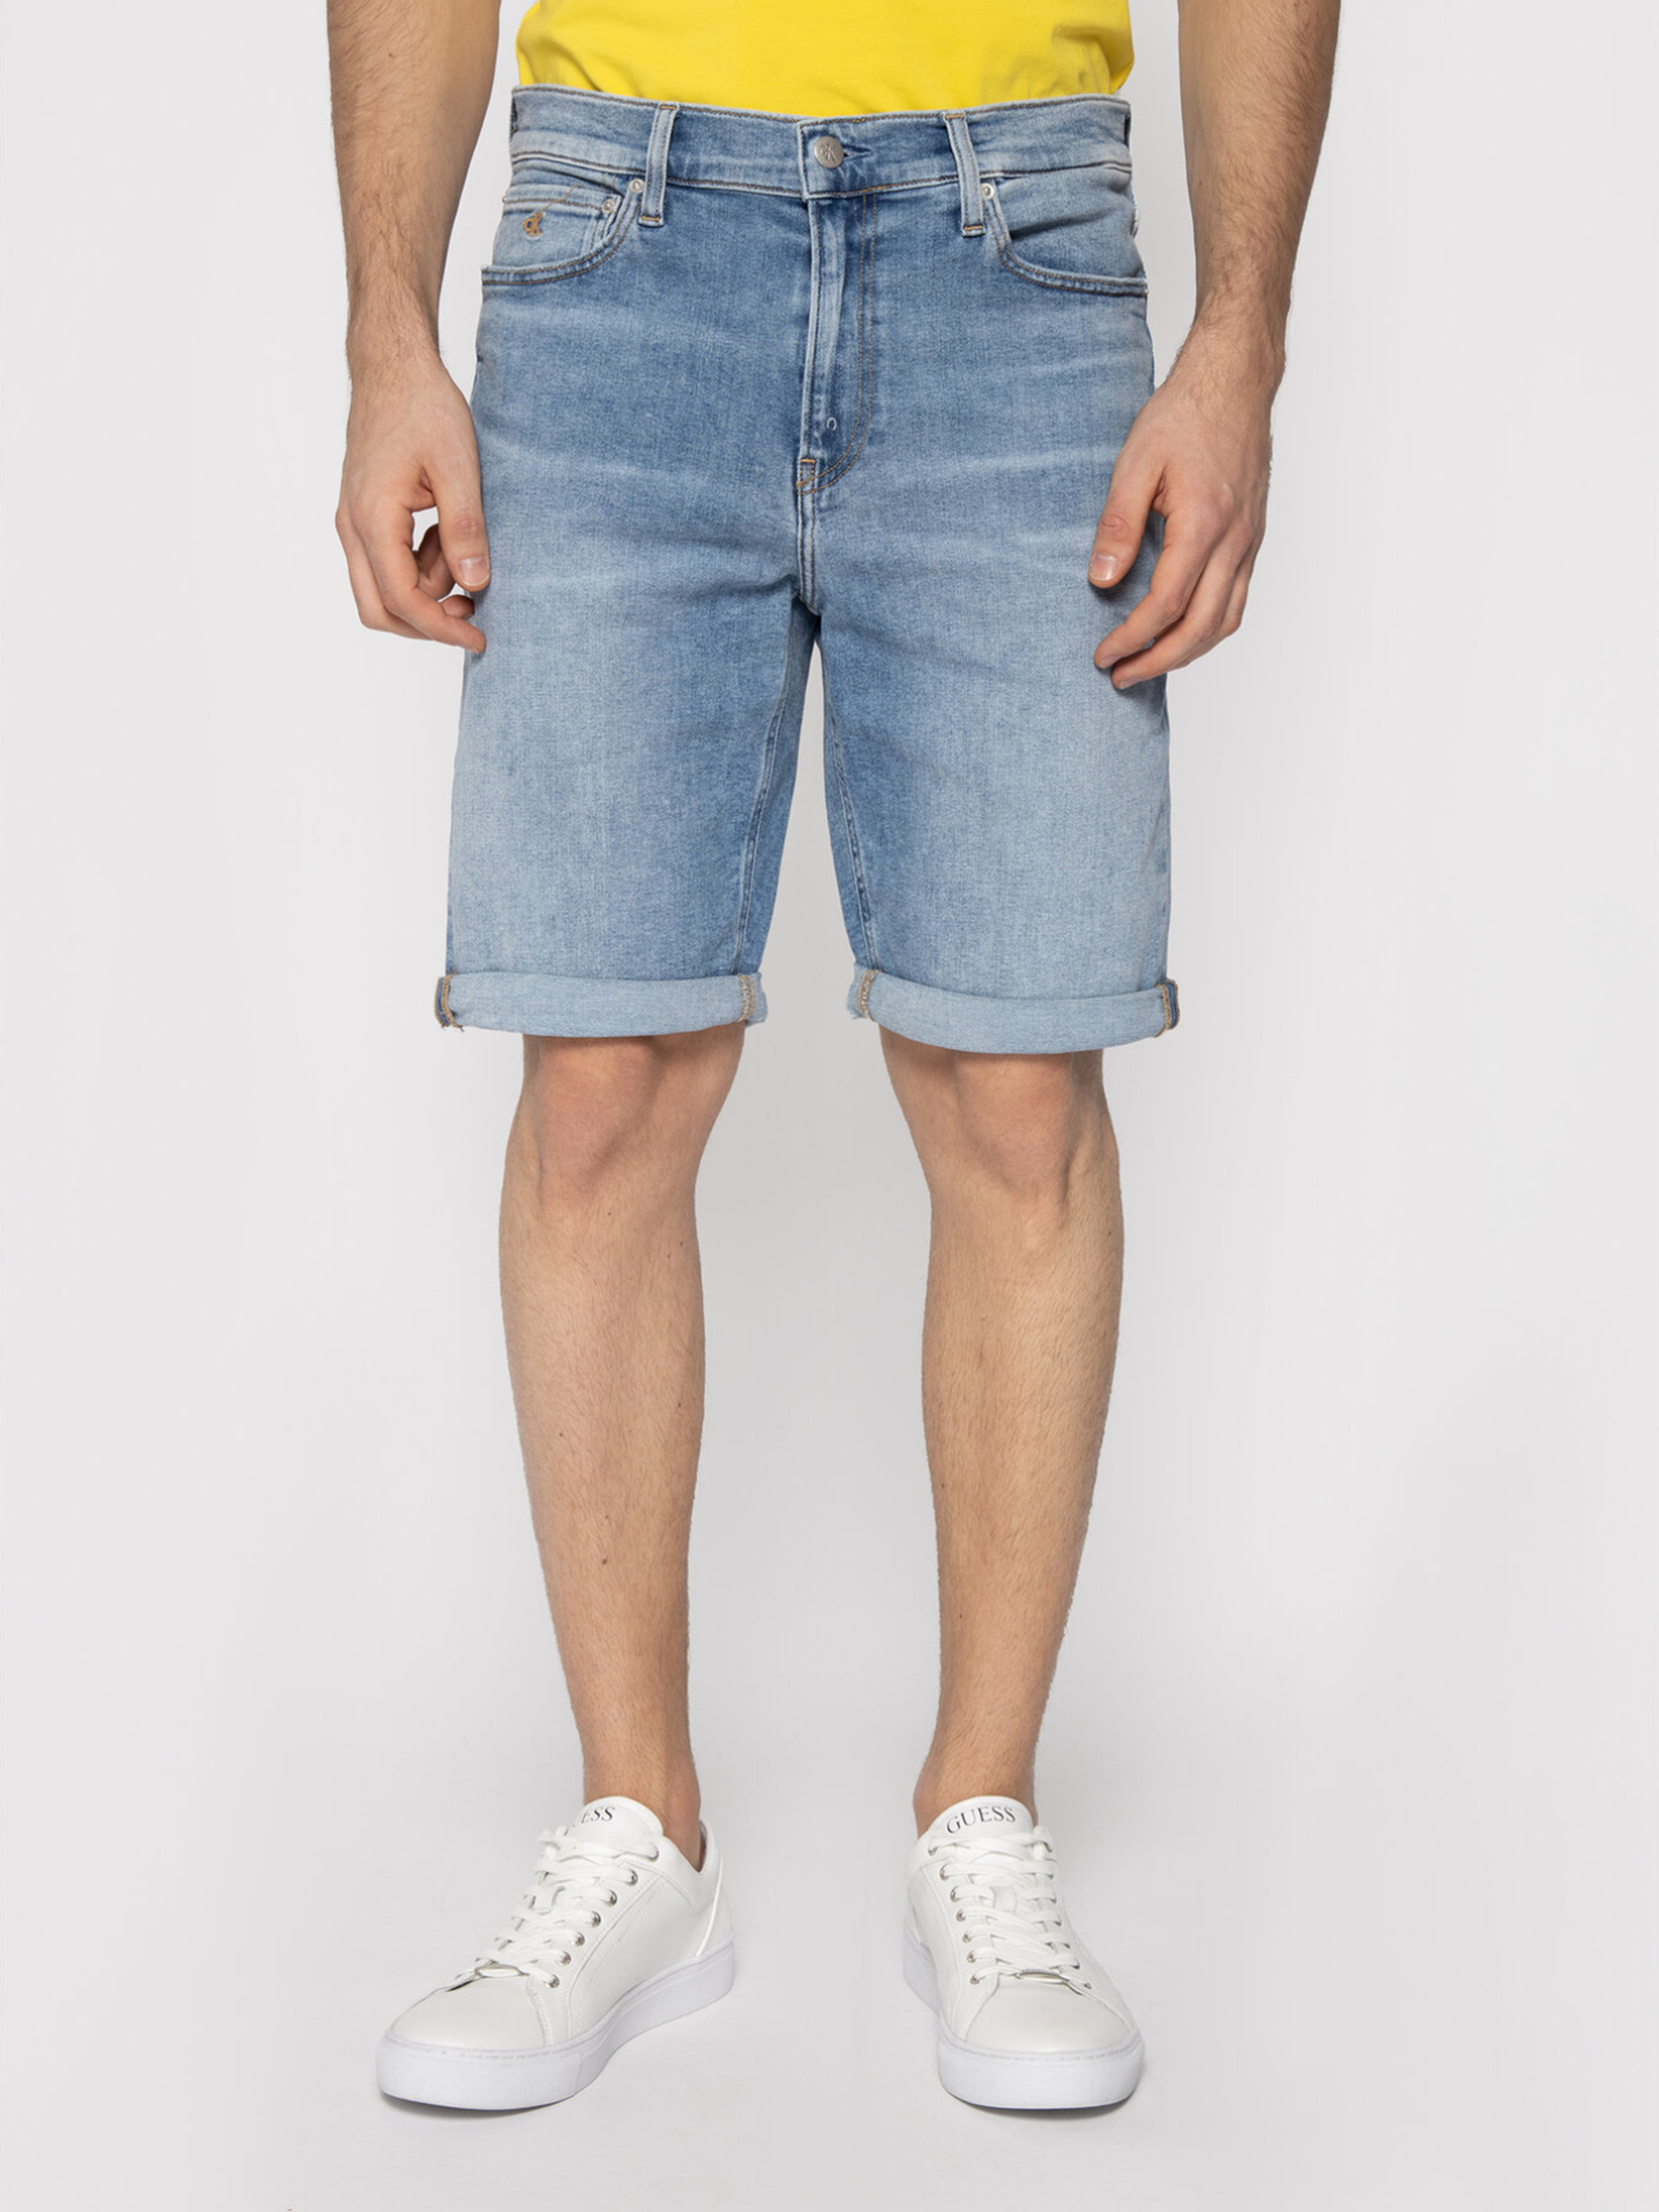 Calvin Klein pánské džínové modré šortky - 34/NI (1AA)